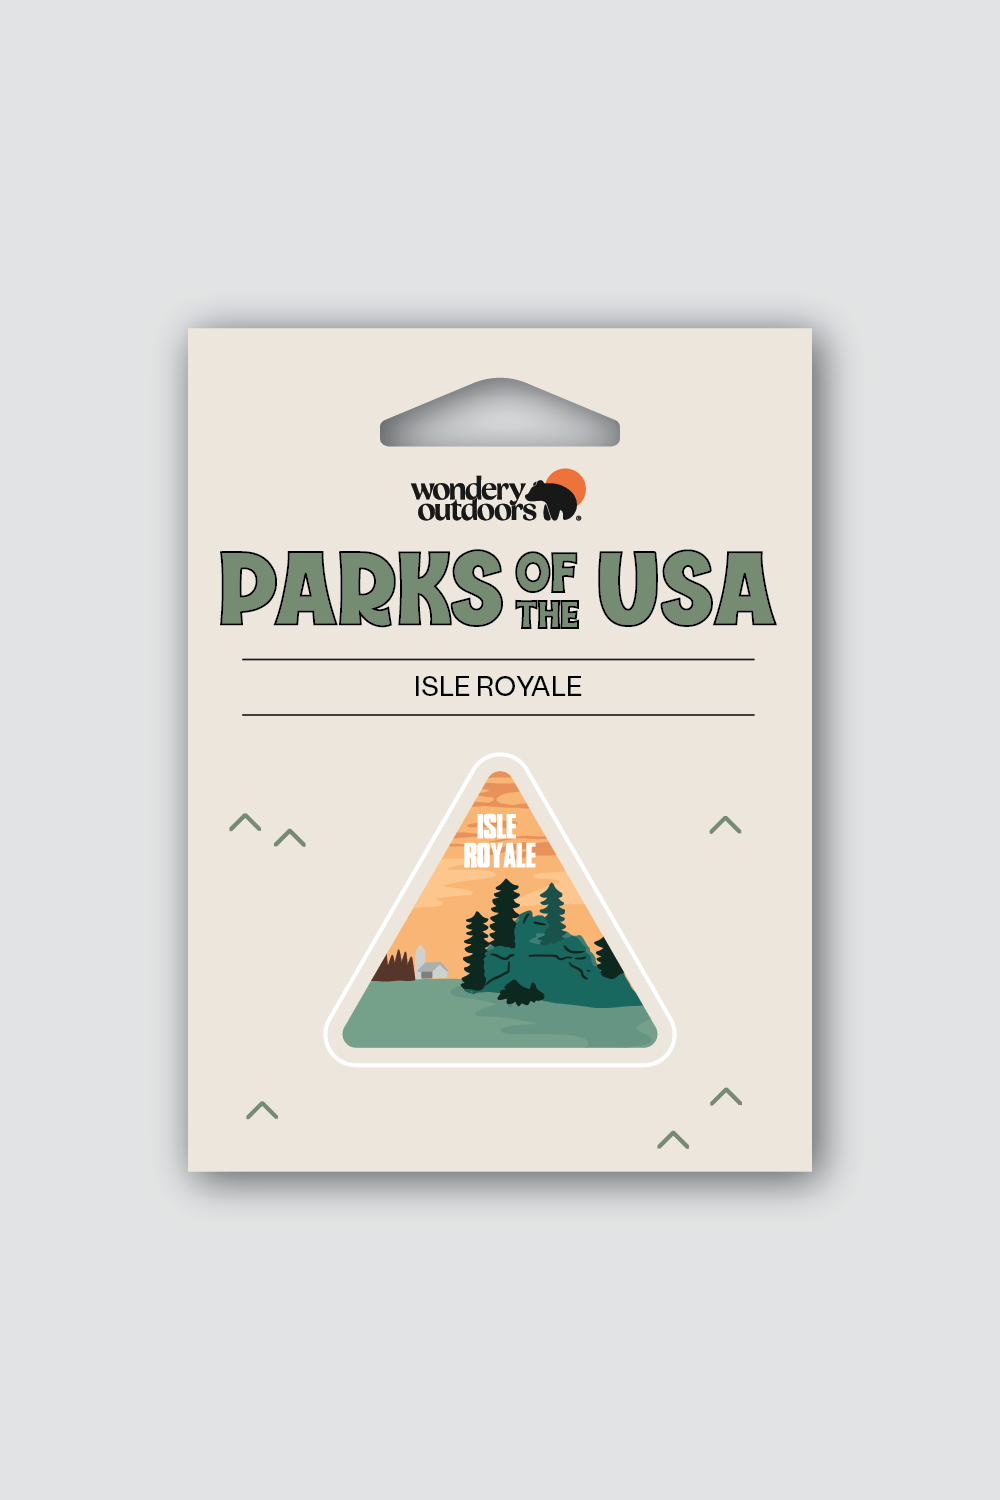 #national park_isle royale _USA National Parks souvenir sticker gift sets